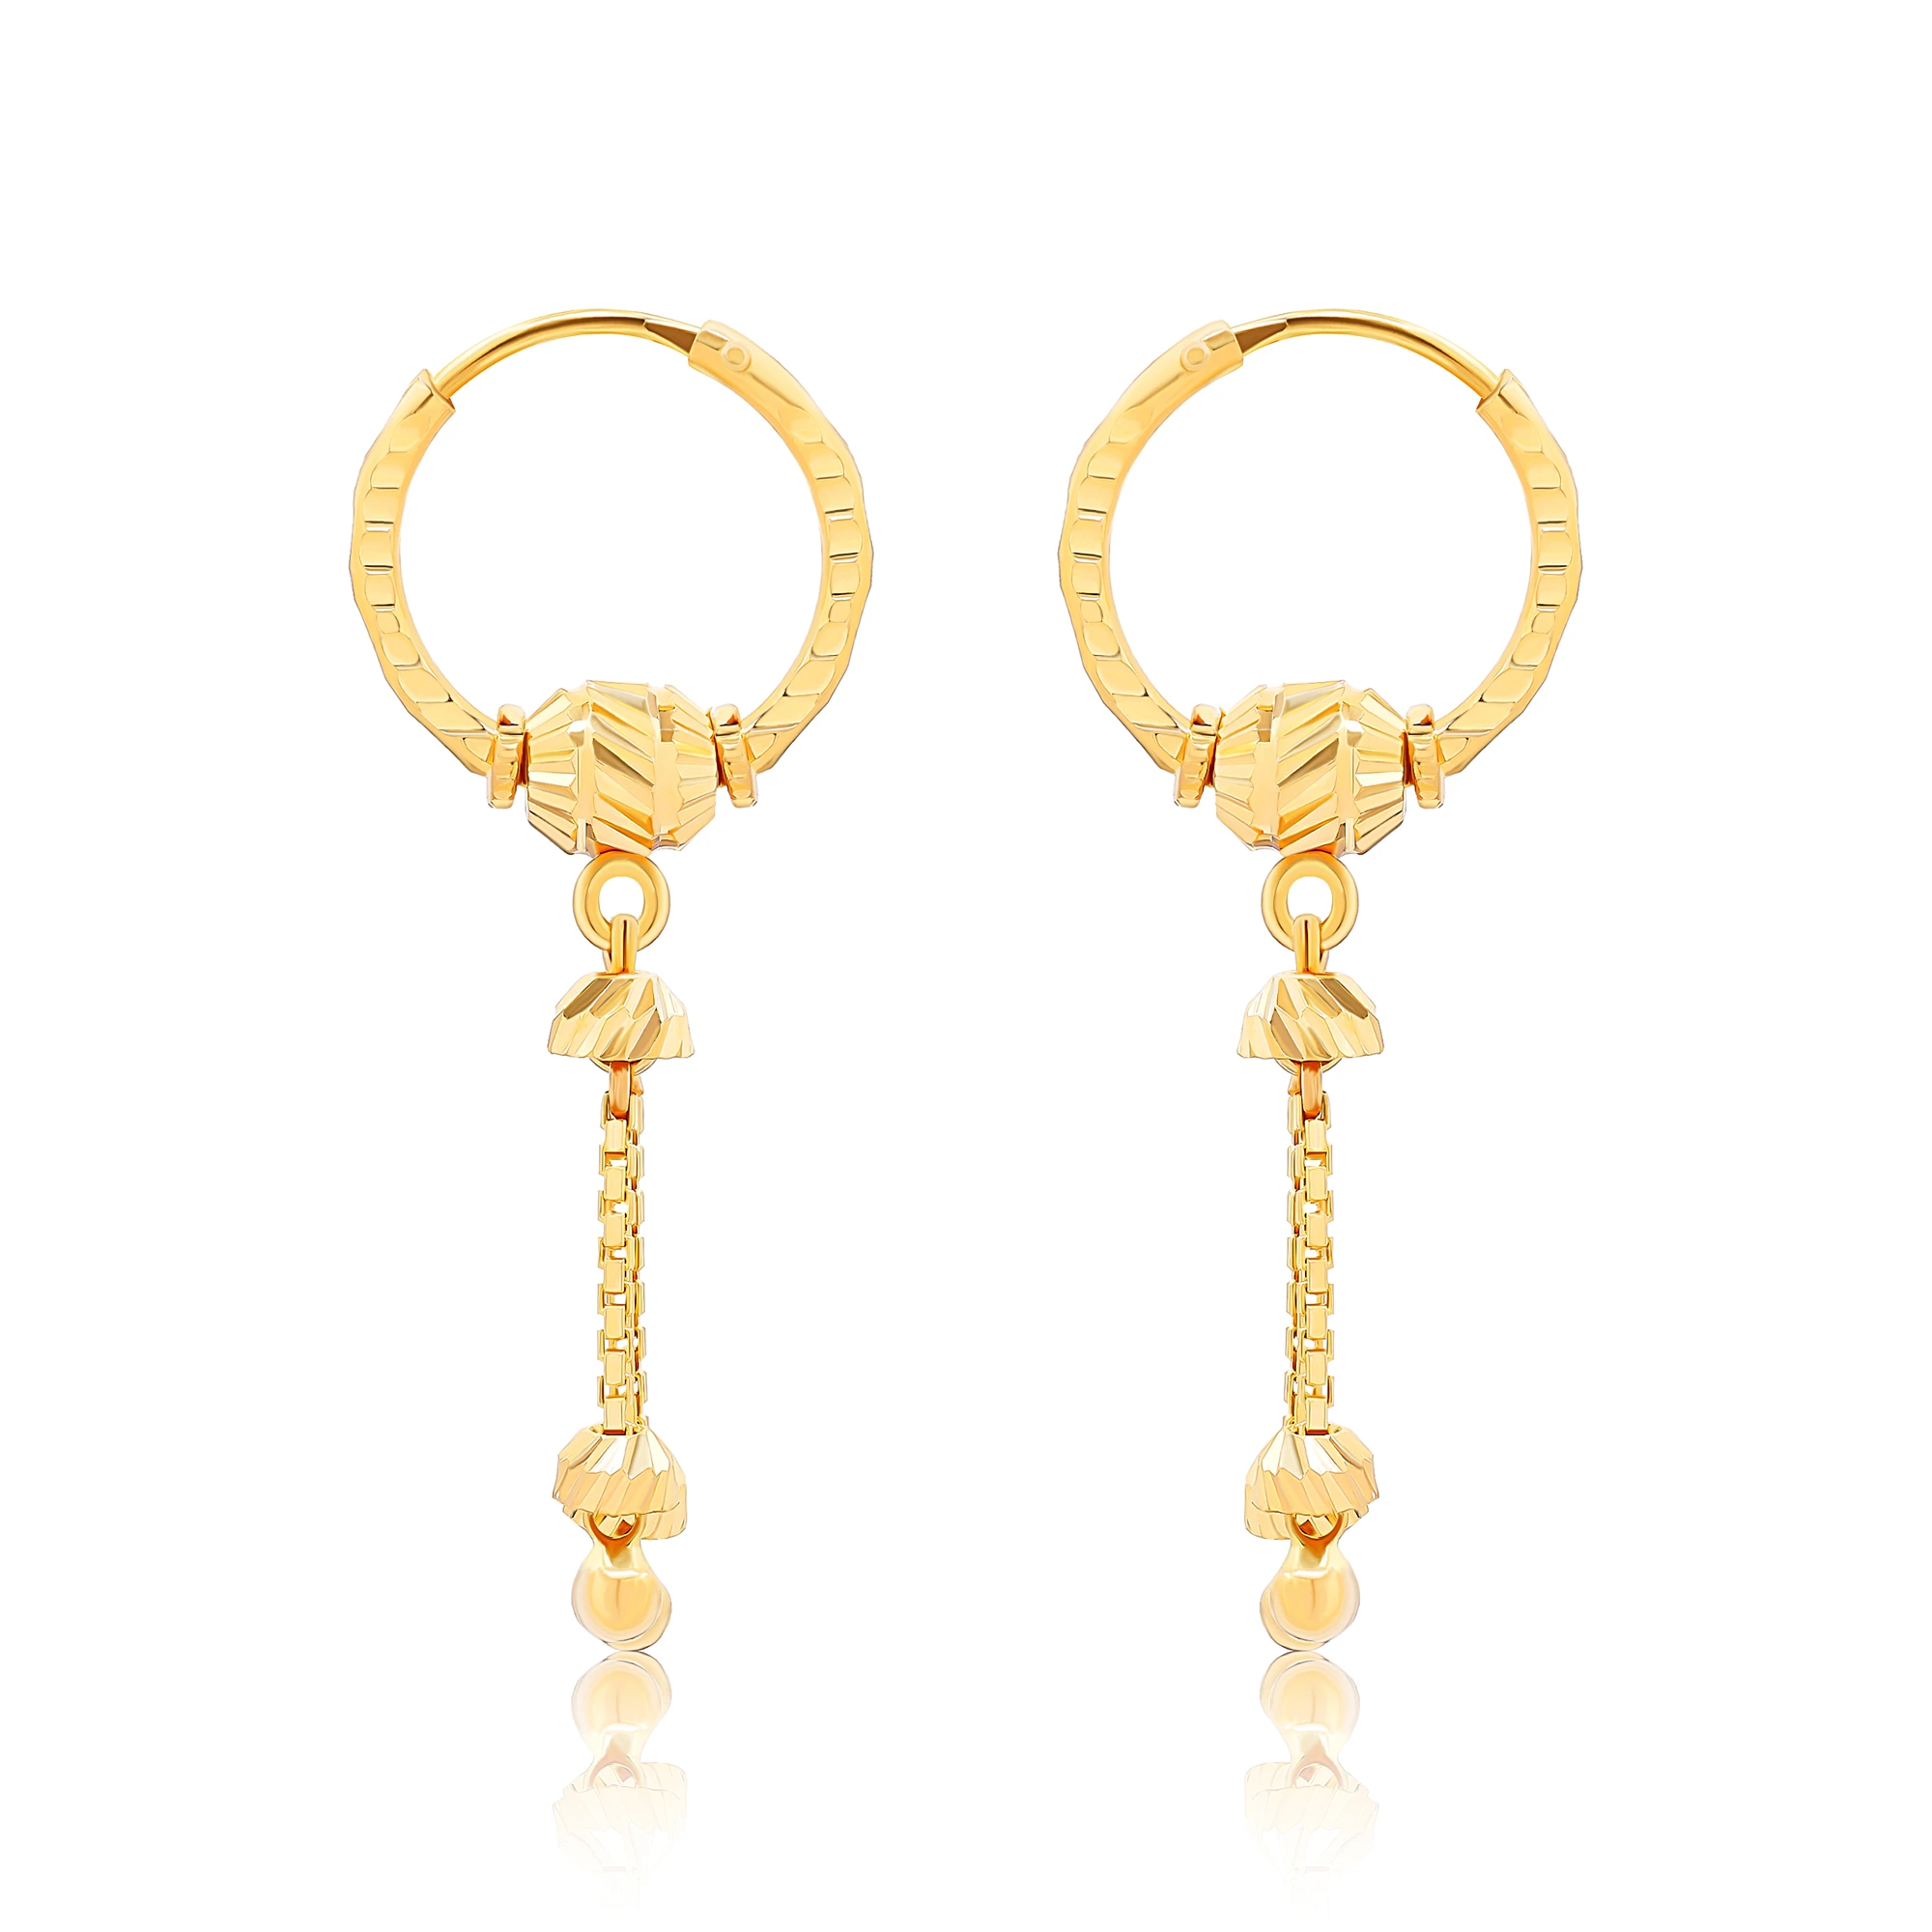 Lot - 22K Gold Dubai Omani wedding jewelry hoop earrings with seed and  freshwater pearl dangle enhancers; 4 3/4